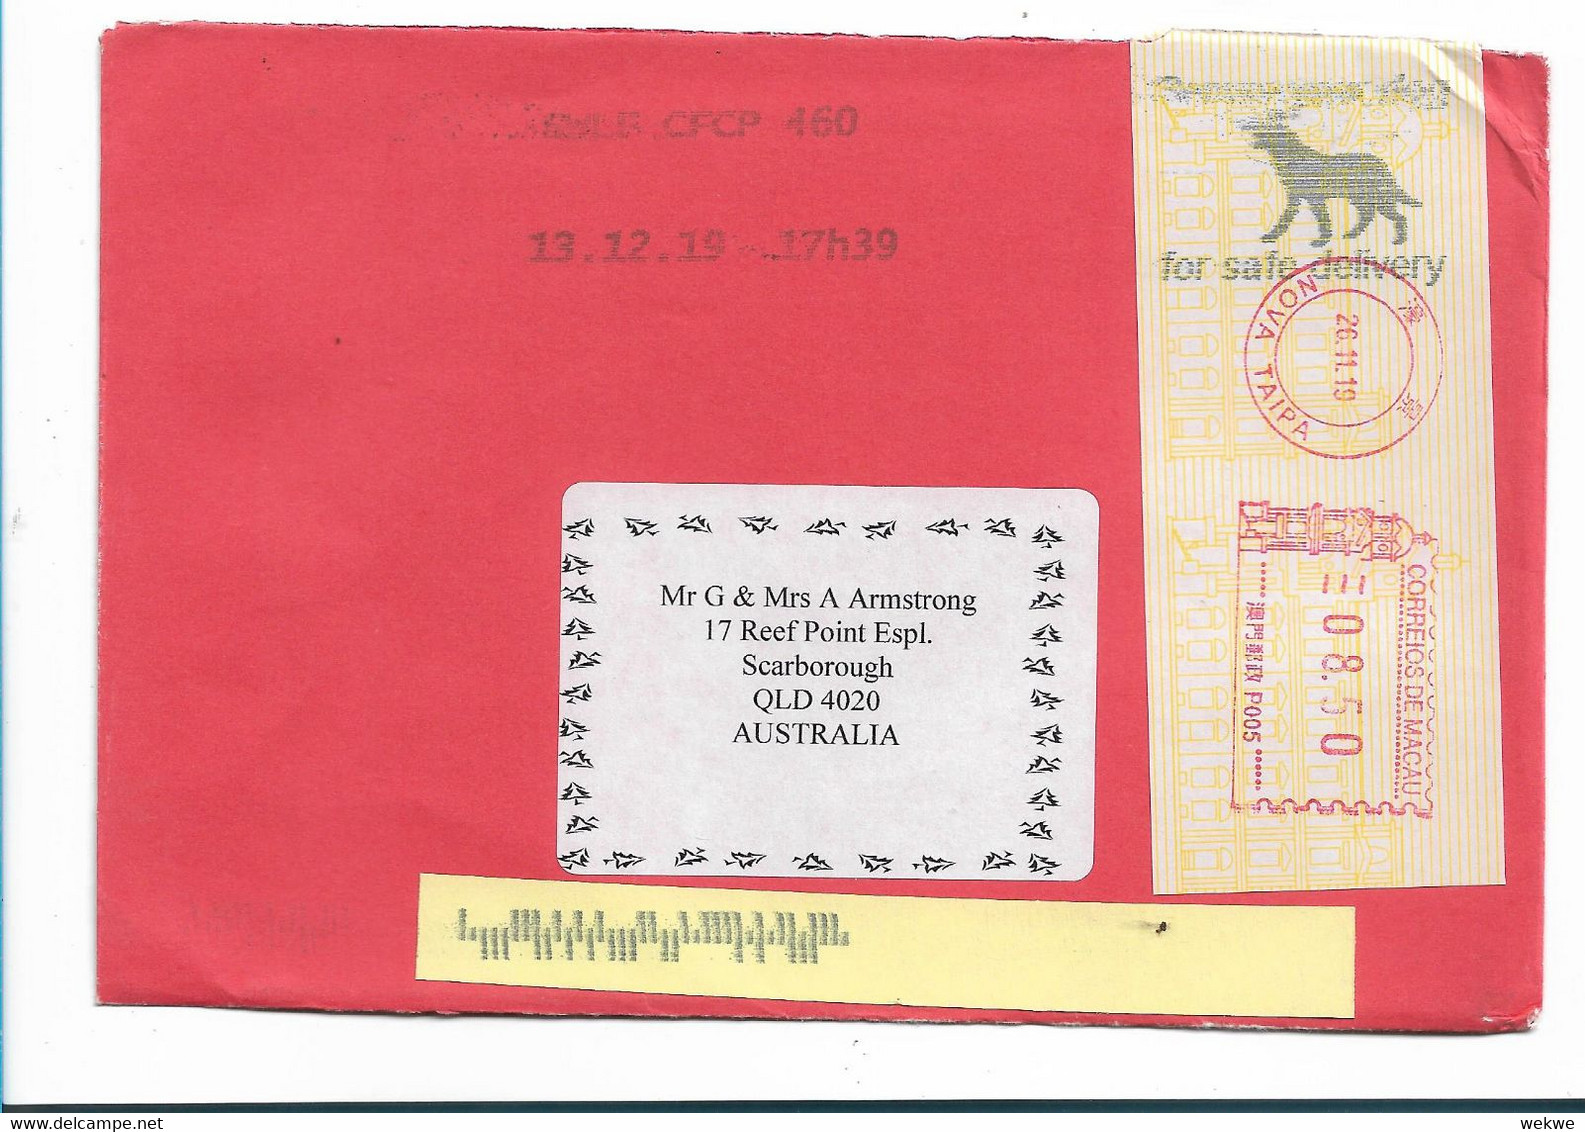 CH-AP021  CHINA / MACAO - Maschinenfrankatur 2019 Mit  Ankunftsstempel Werbung Für Hund For,safe Delivery (dog, Perro) - Covers & Documents